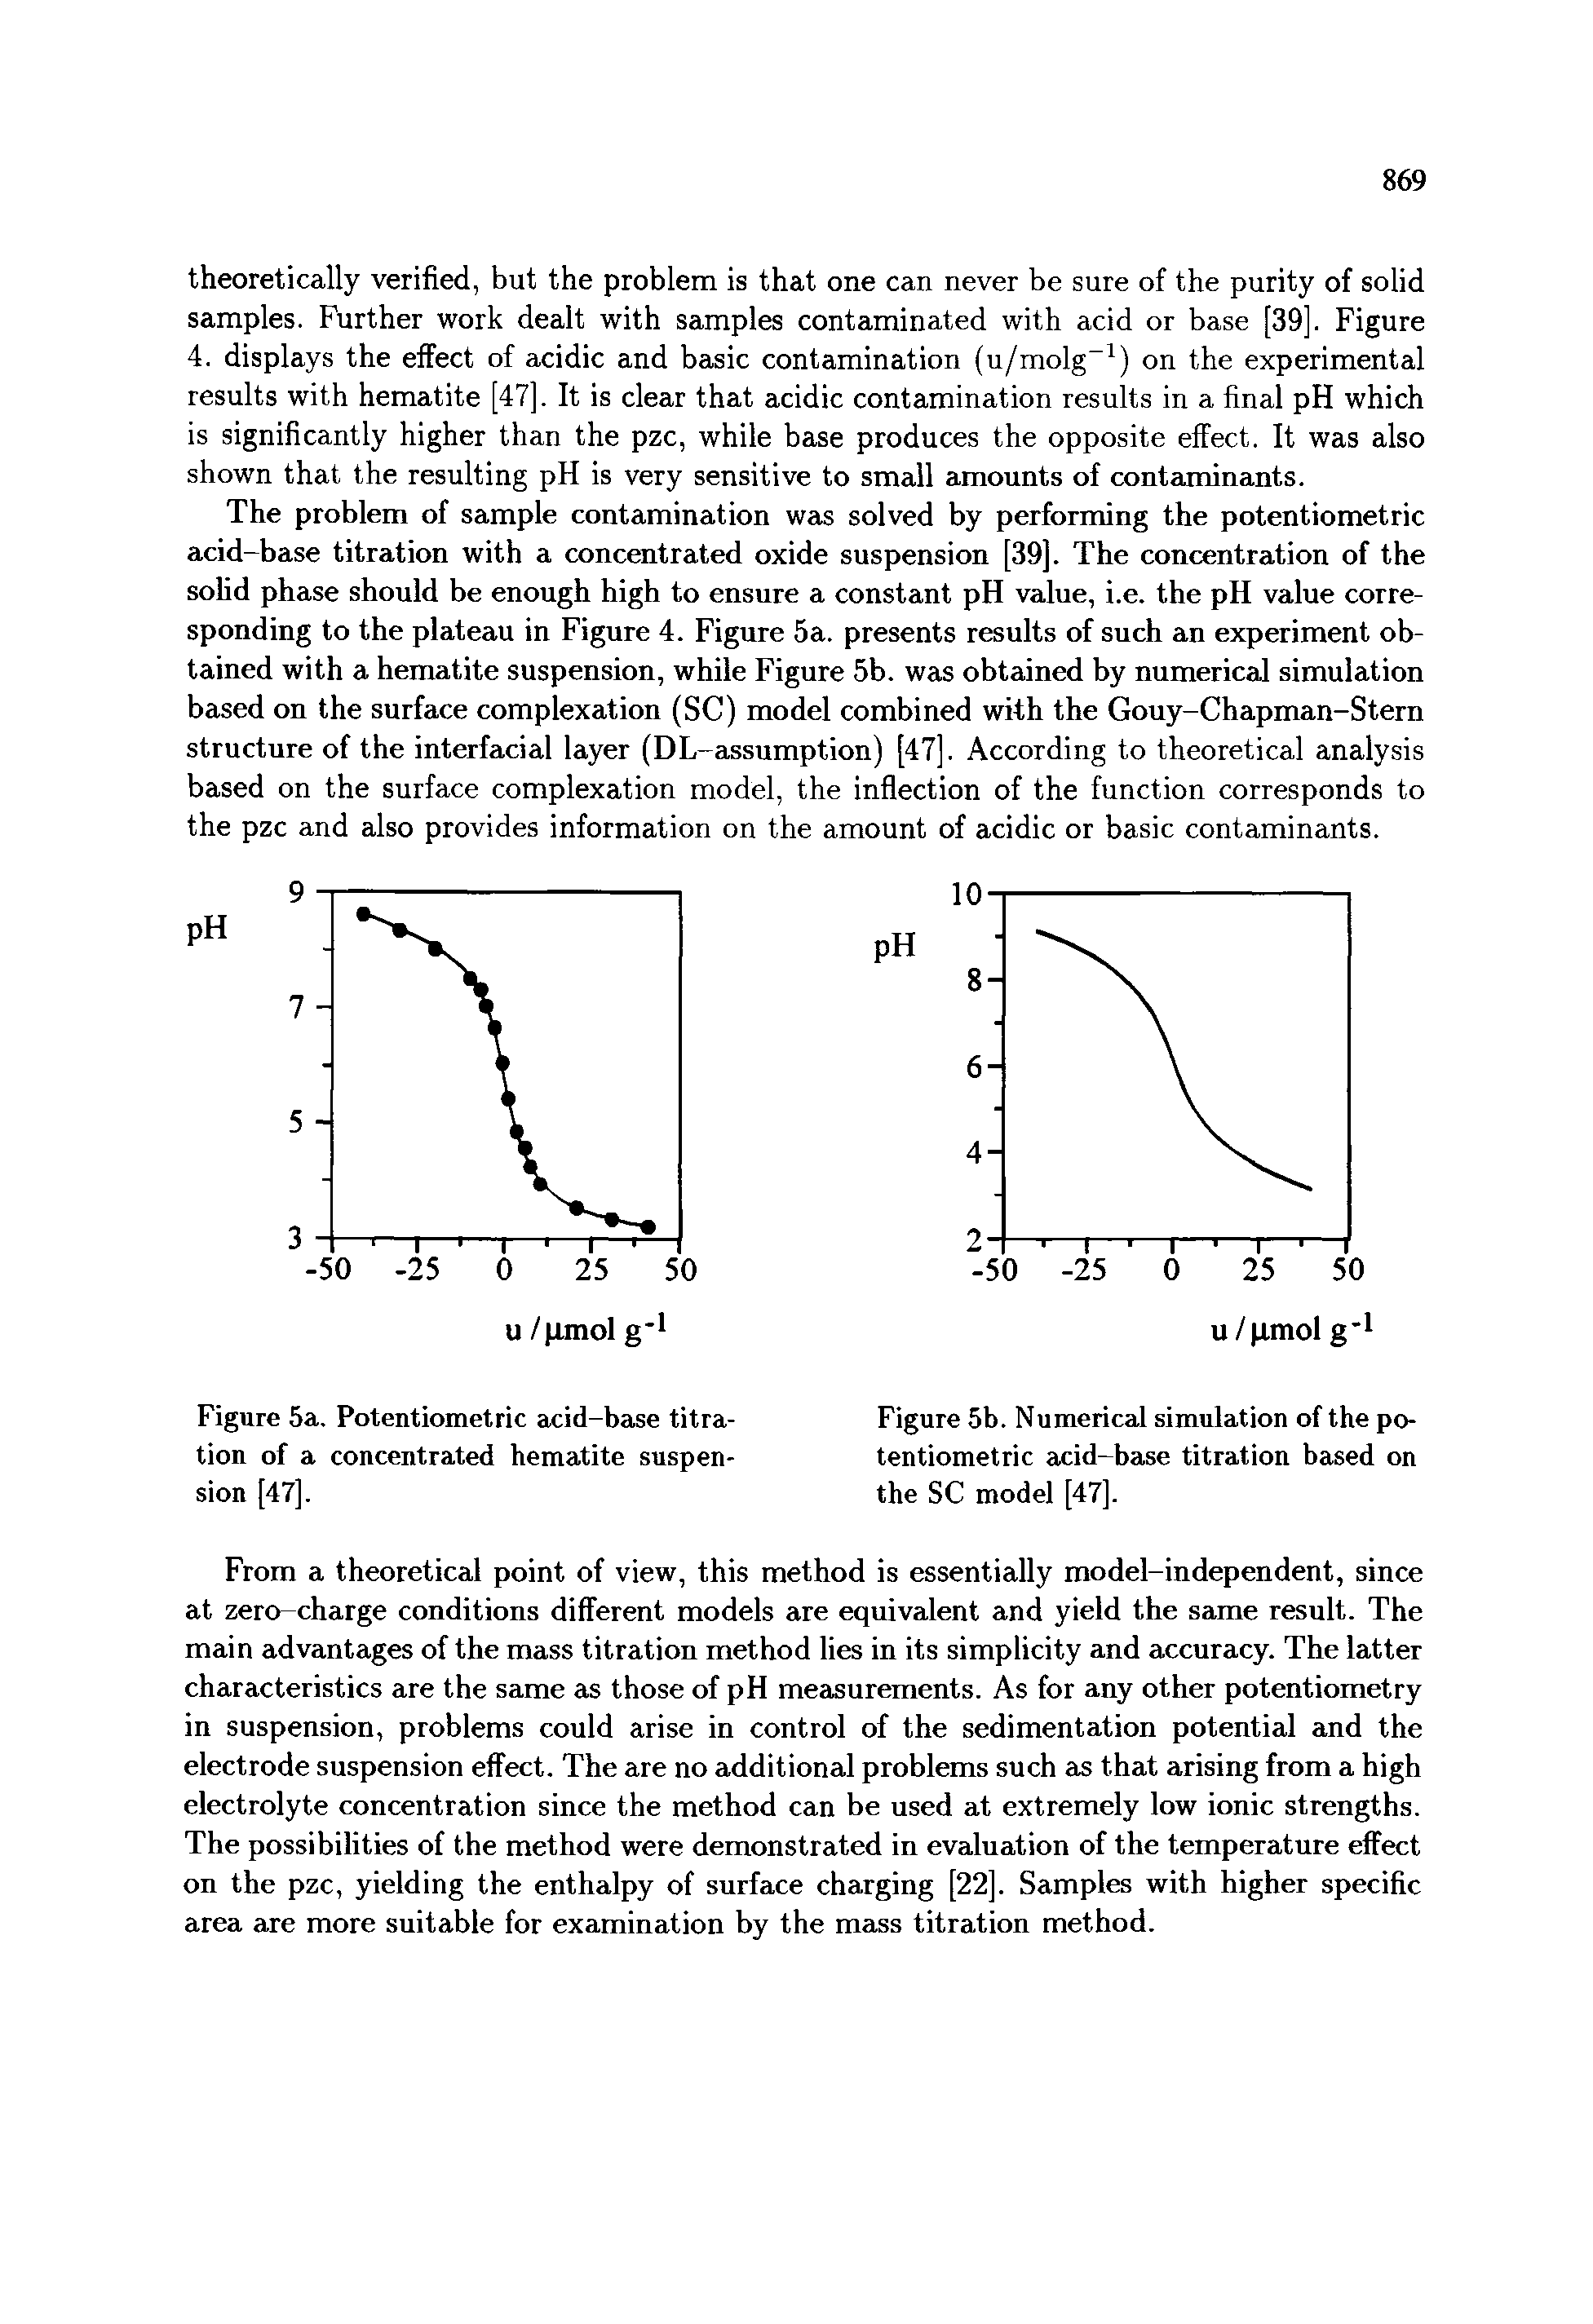 Figure 5b. Numerical simulation of the potentiometric acid-base titration based on the SC model [47].